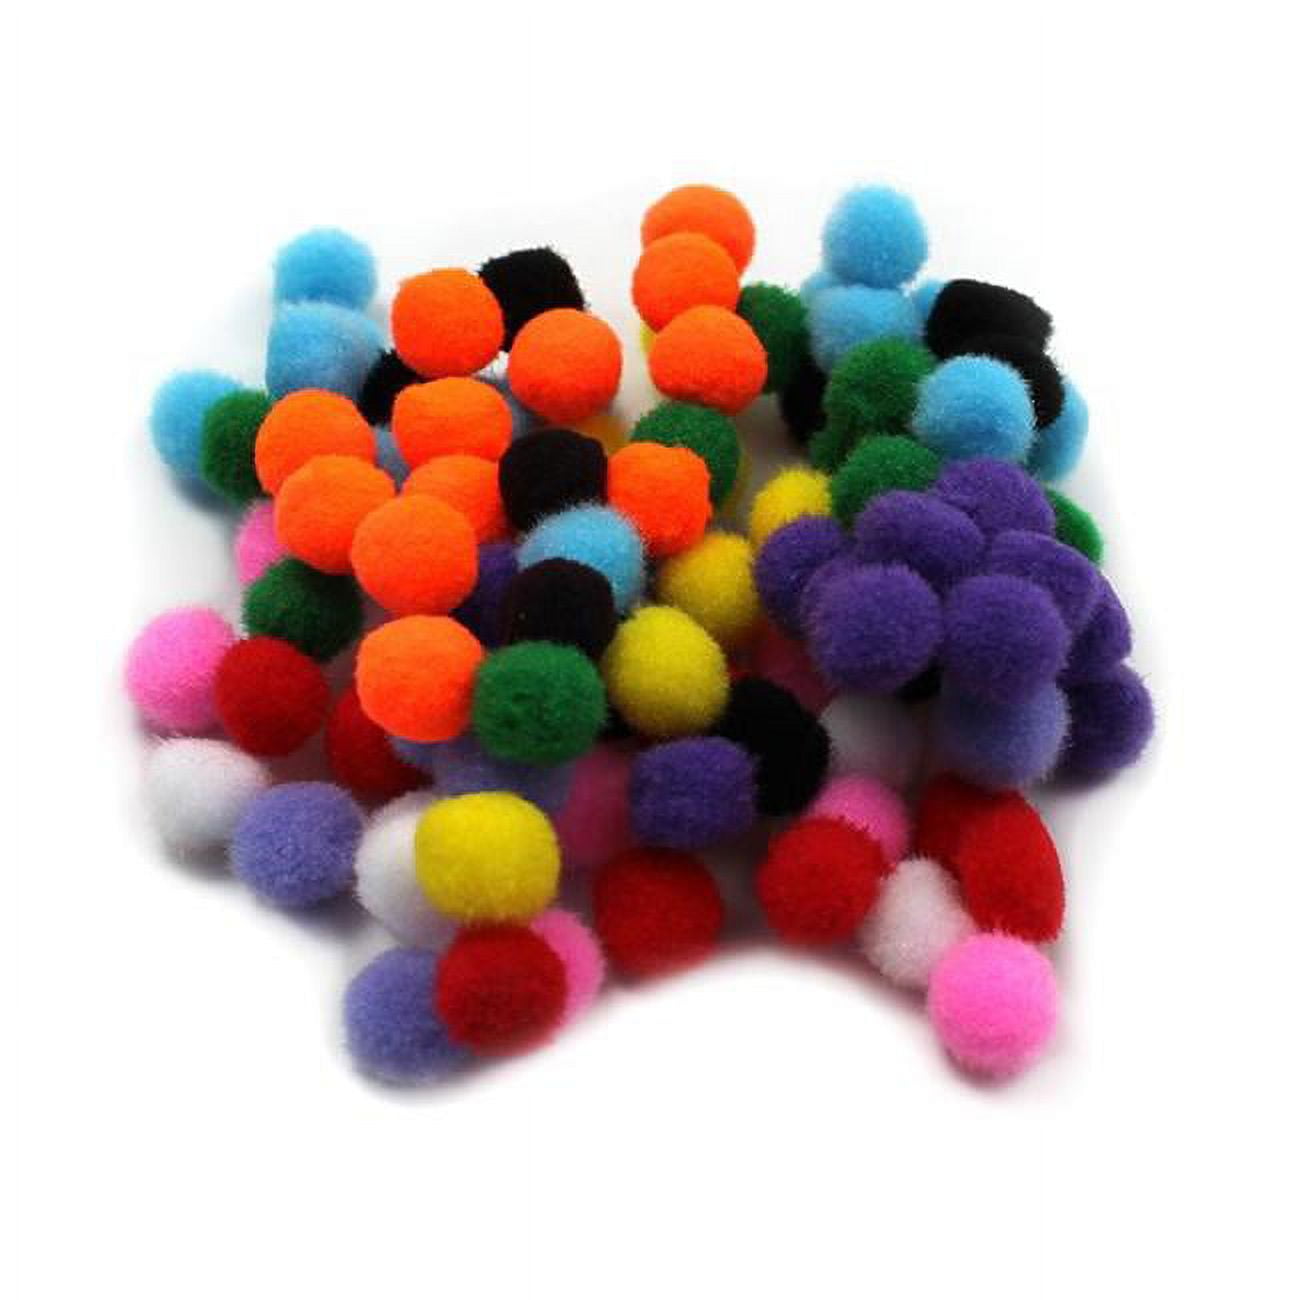 Felt Pom Poms,Wool Felt Balls 60 Pieces,0.6 Inch Handmade Felted 40 Colors  Bulk Wool Felt Pom Pom Balls Small Puff for DIY Arts,Crafts  Projects,Felting and Garland 